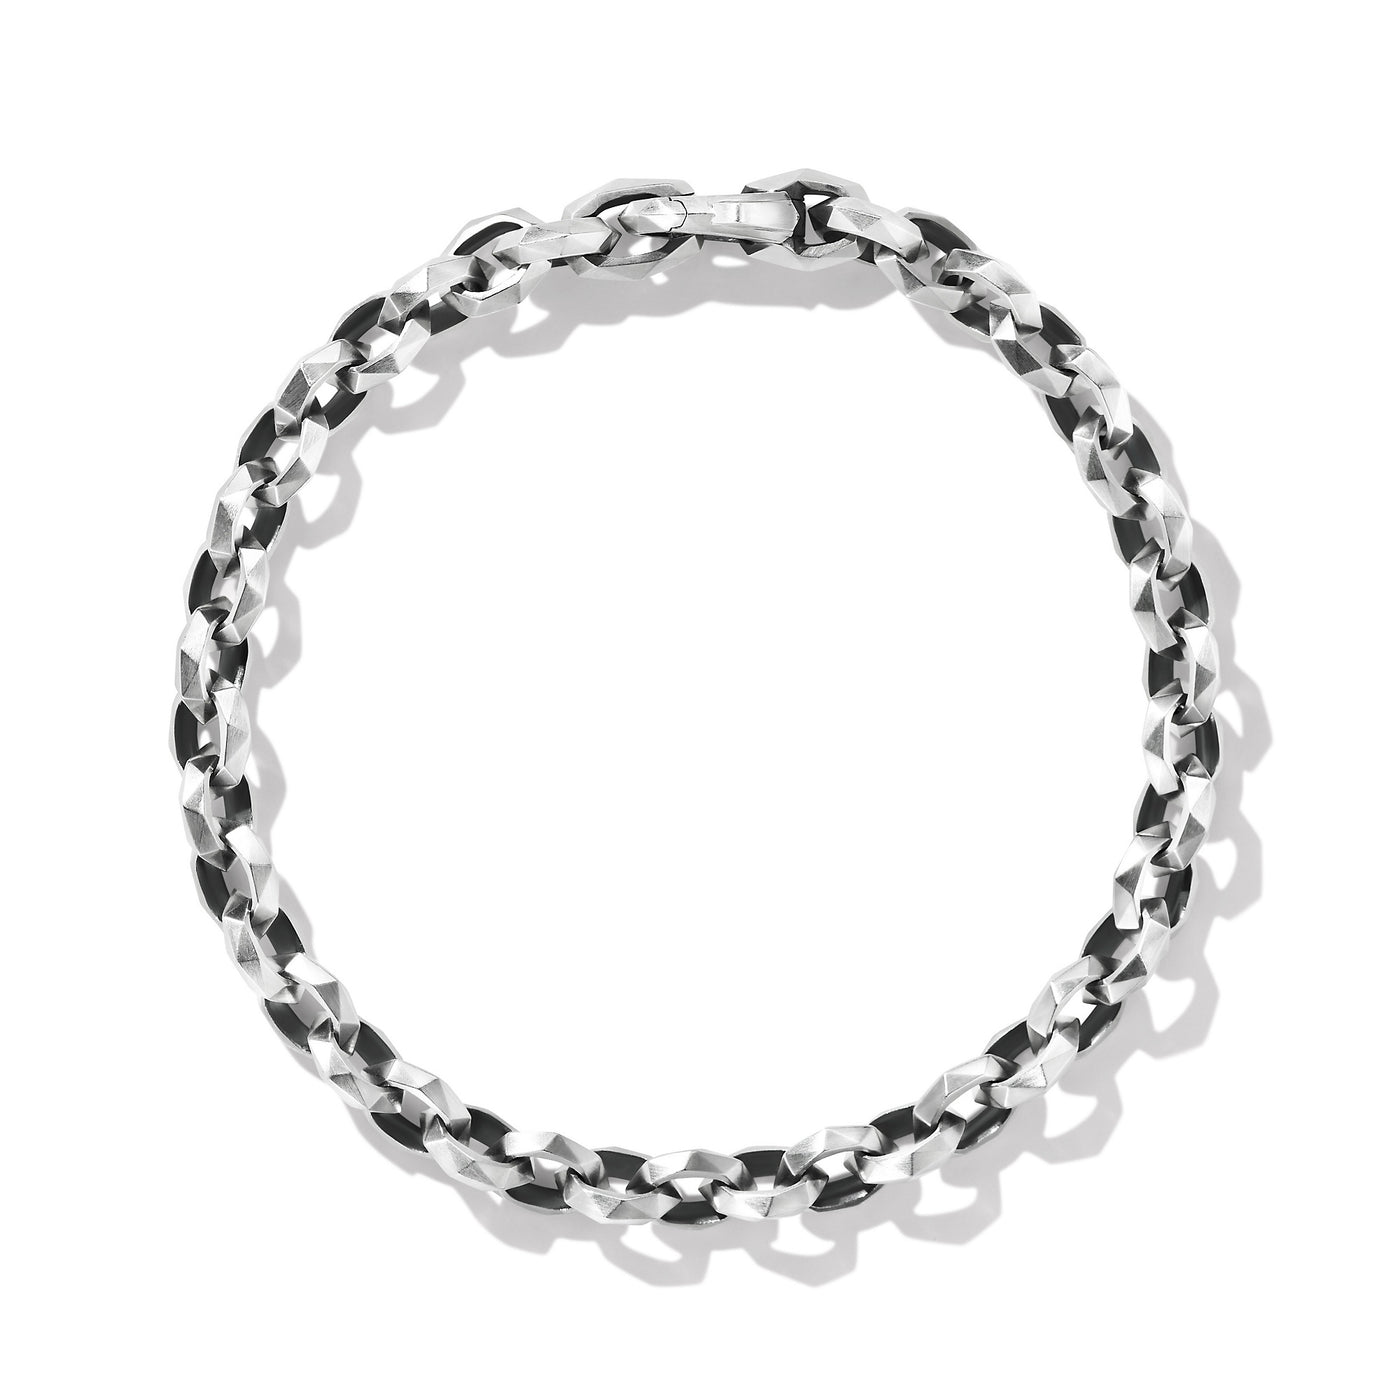 Torqued Faceted Chain Link Bracelet in Sterling Silver\, 7mm